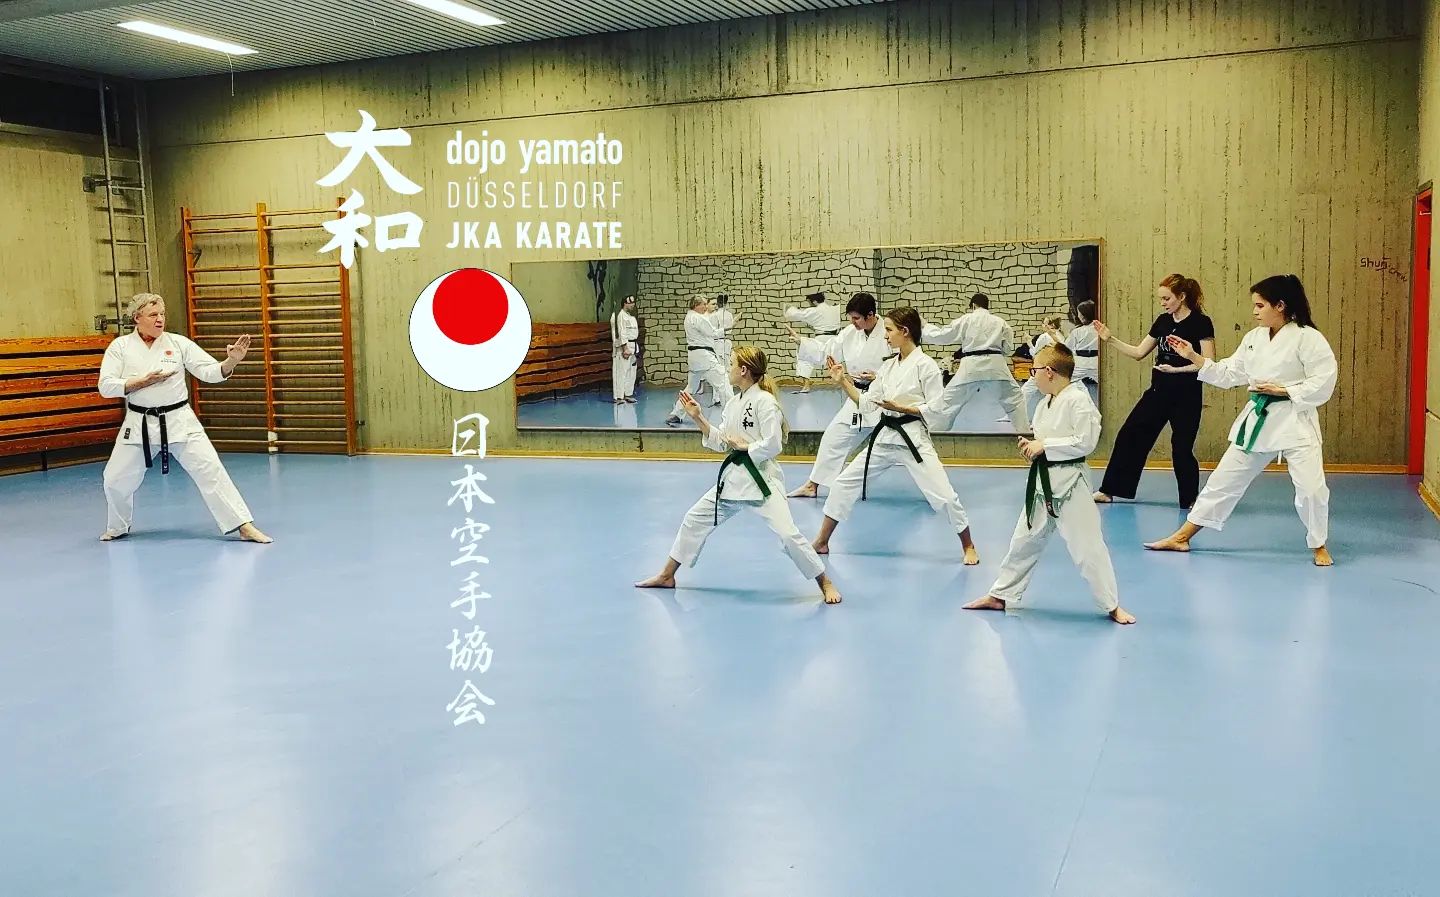 Training im Dojo Yamato Düsseldorf e.V. 🥋
.
.
.
.
.
..
.
.
.
#karate #training #fun #jka #djkb #kihon #kata #kumite #düsseldorf #duesseldorf #japan #sport #sportmotivation #shotokan #traditional #nrw #yamatoduesseldorf #fitness #fitnessmotivation #jkaKarate #jkakaratedo #neuss #ratingen #hilden #leverkusen #kaarst #selbstbstbewusstsein #selbstvertrauen